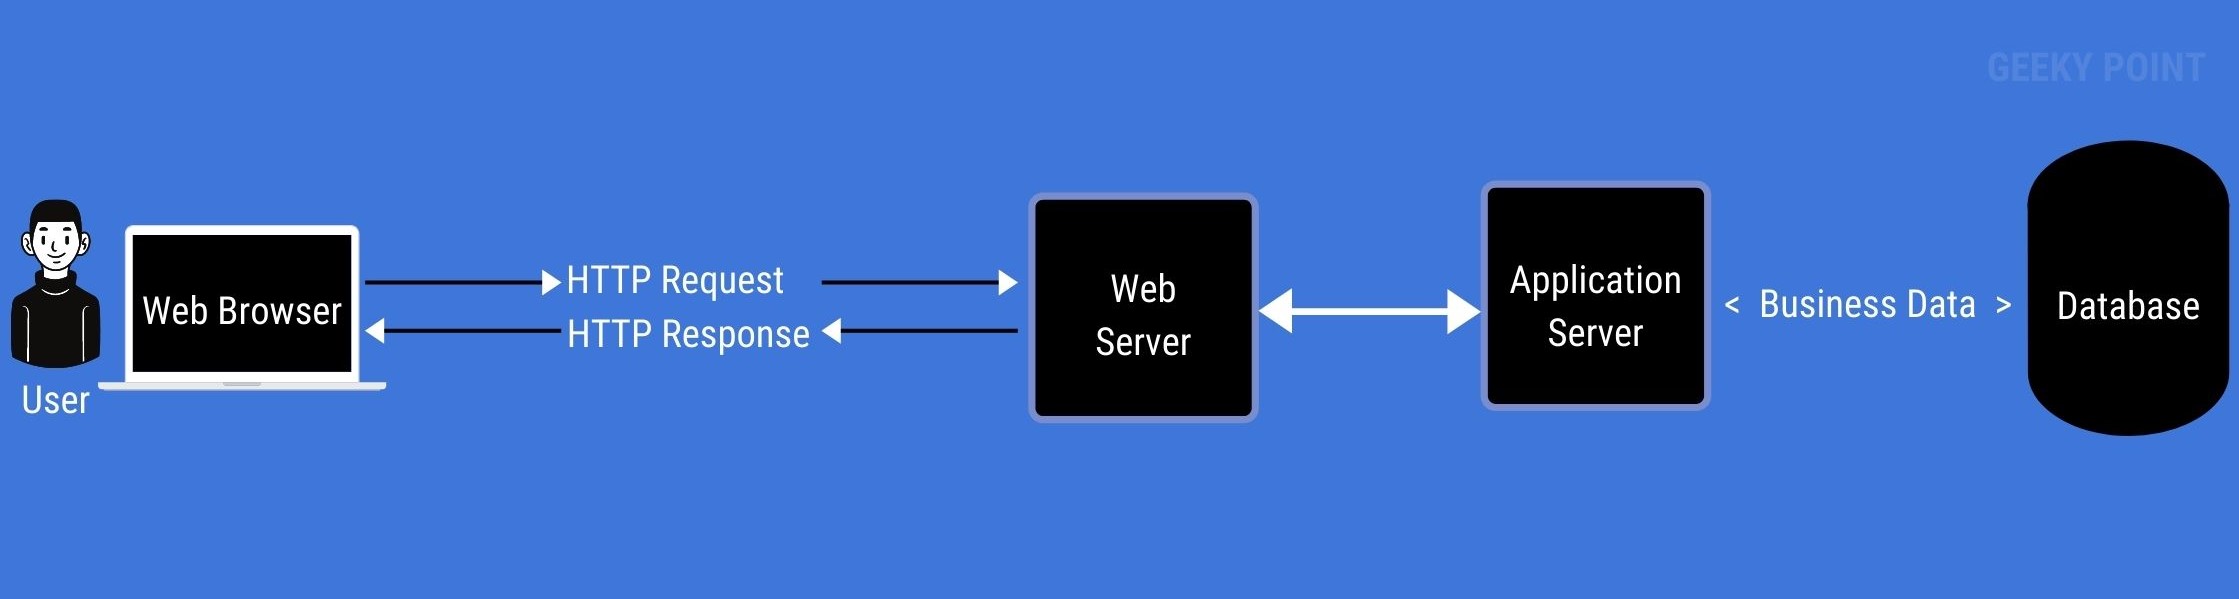 application server image representation